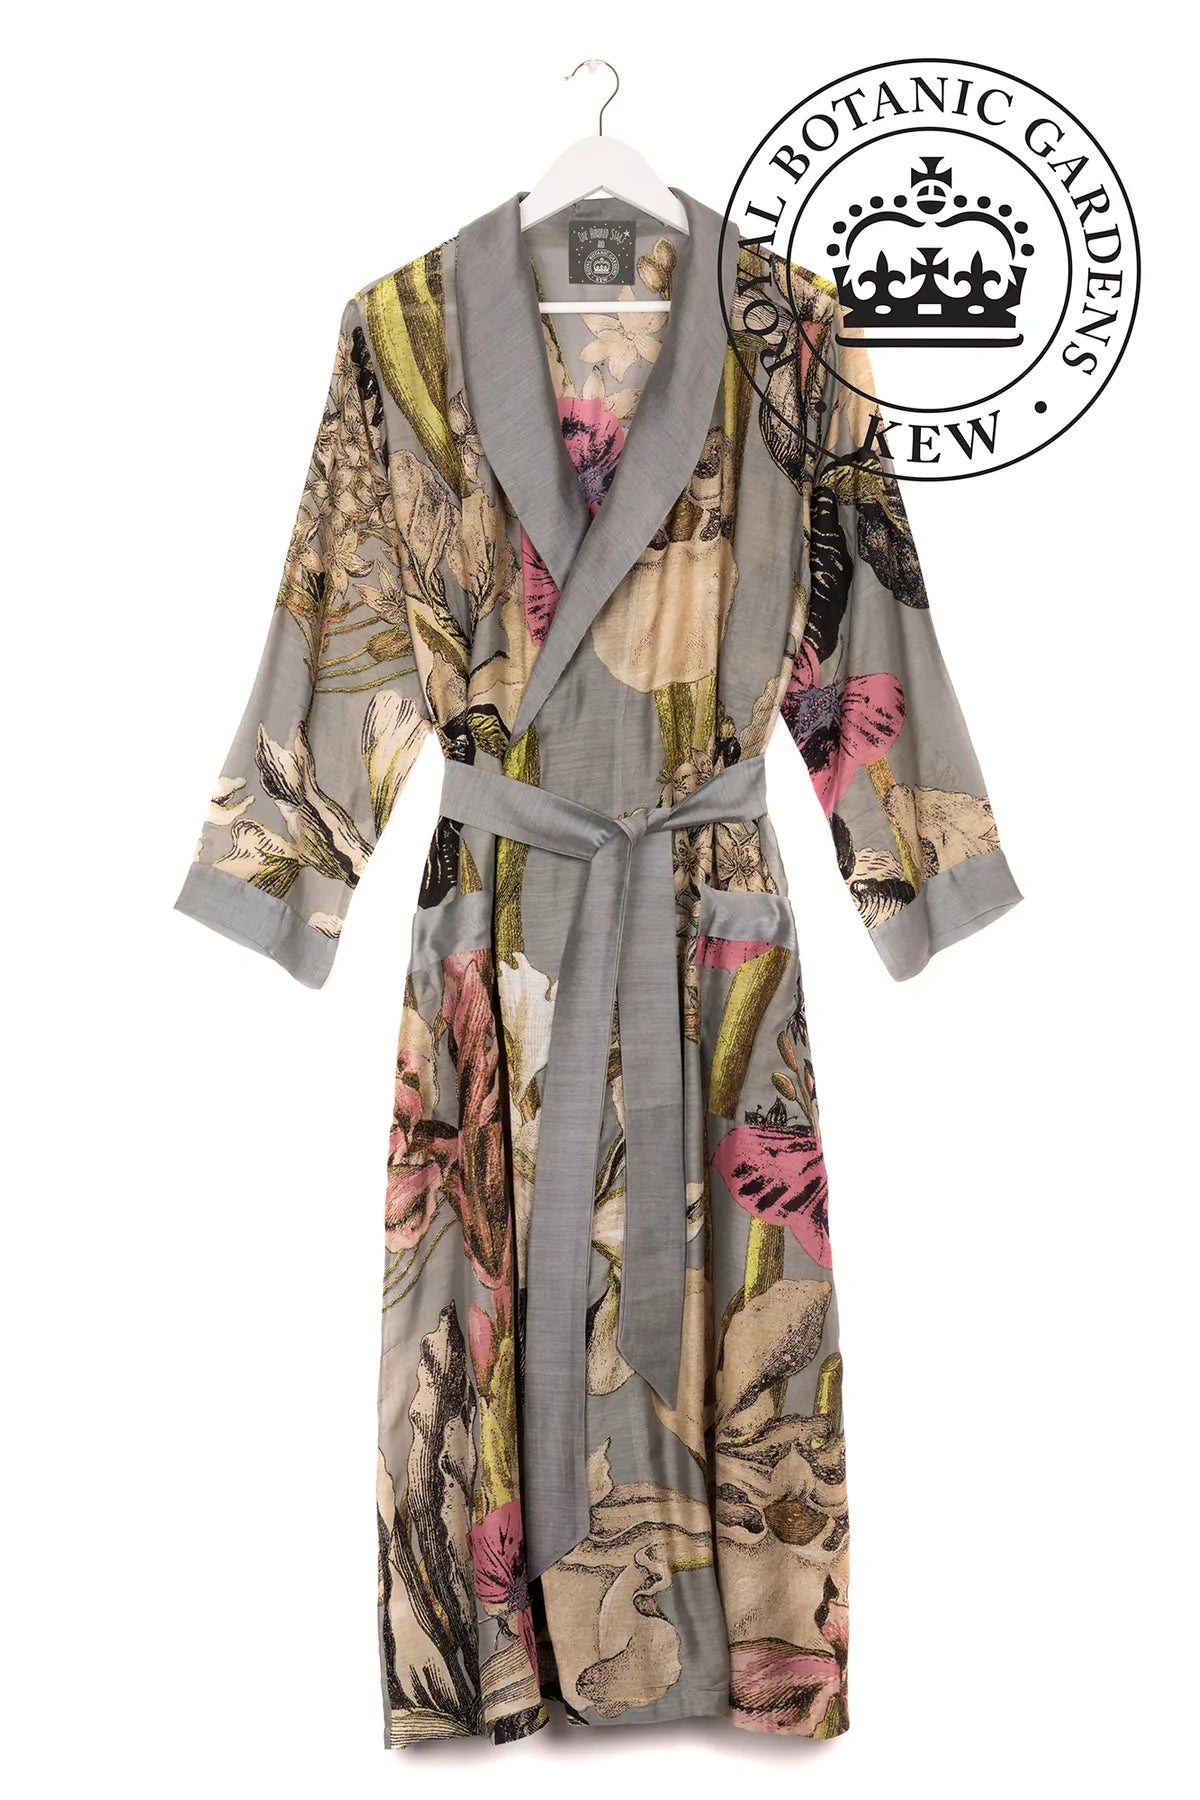 Grey lightweight dressing gown with iris flower designs and pink butterflies